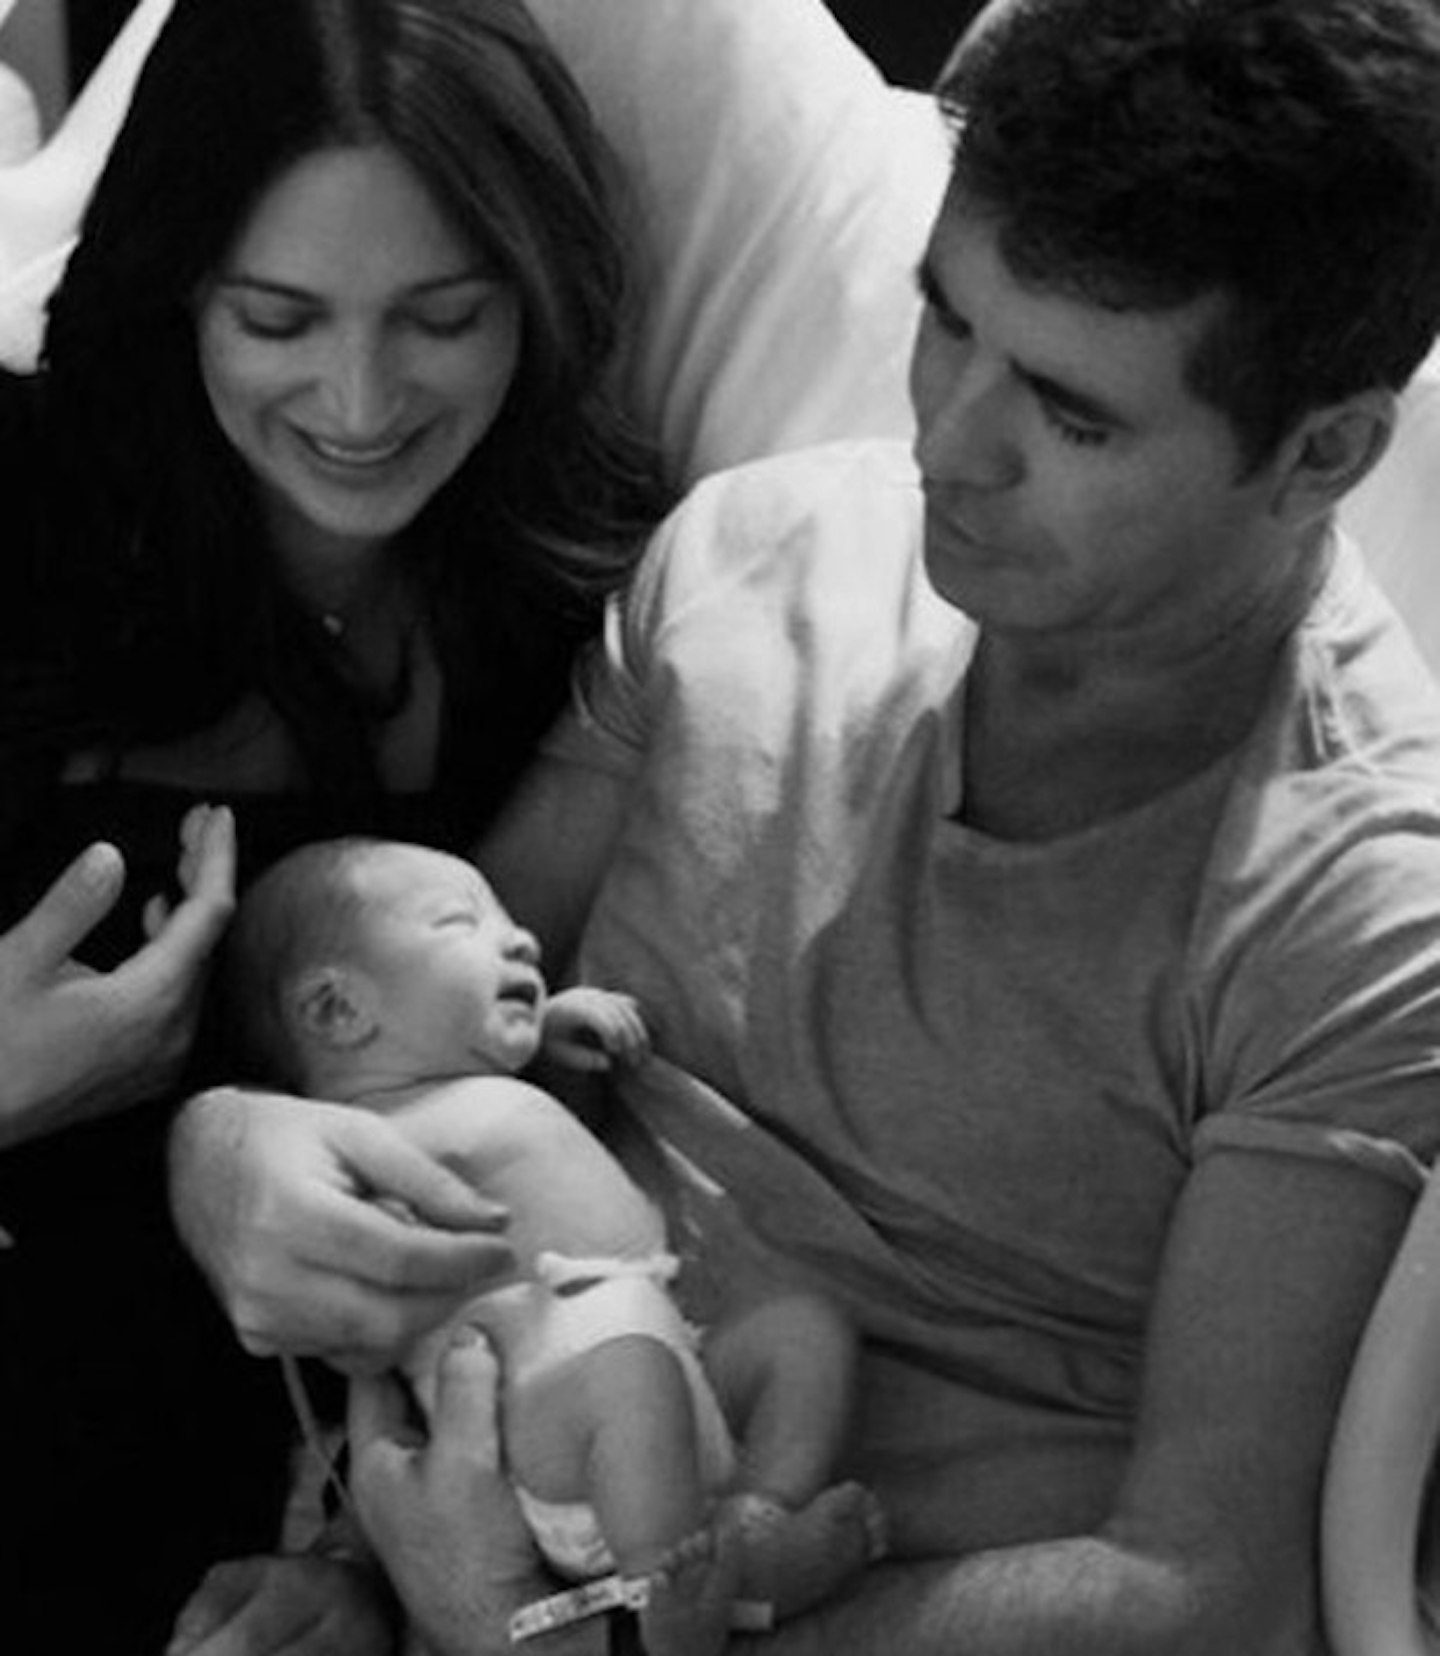 February 2014: Simon Cowell welcomed son Eric